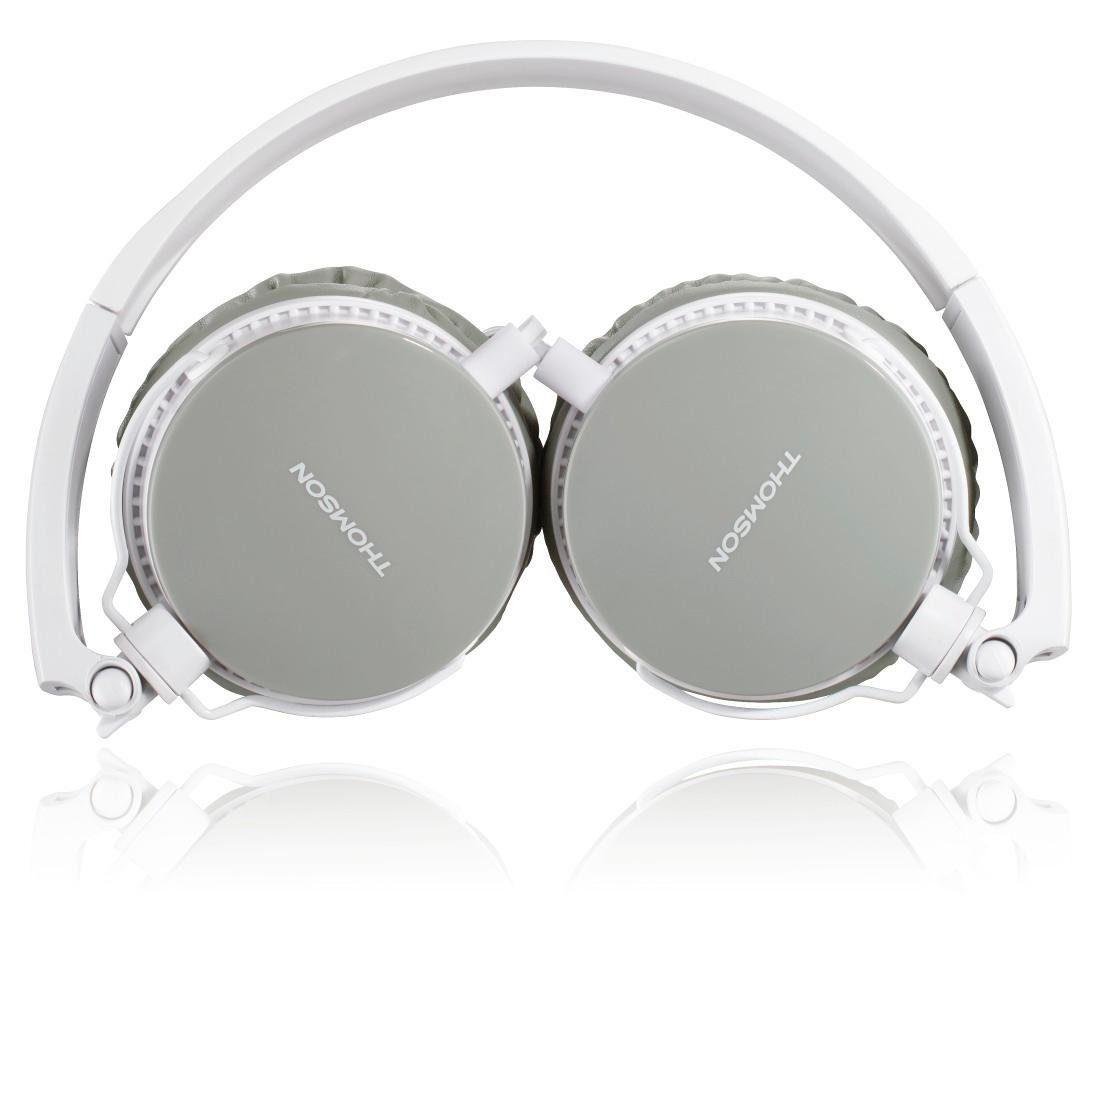 Thomson On Telefon Ear Kabel, mit mm Funktion, Headset, Mikrofon, 3,5 Kopfhörer (Freisprechfunktion, Klinkenstecker Rufannahmetaste, On-Ear-Kopfhörer Weiß) faltbar, Farbe